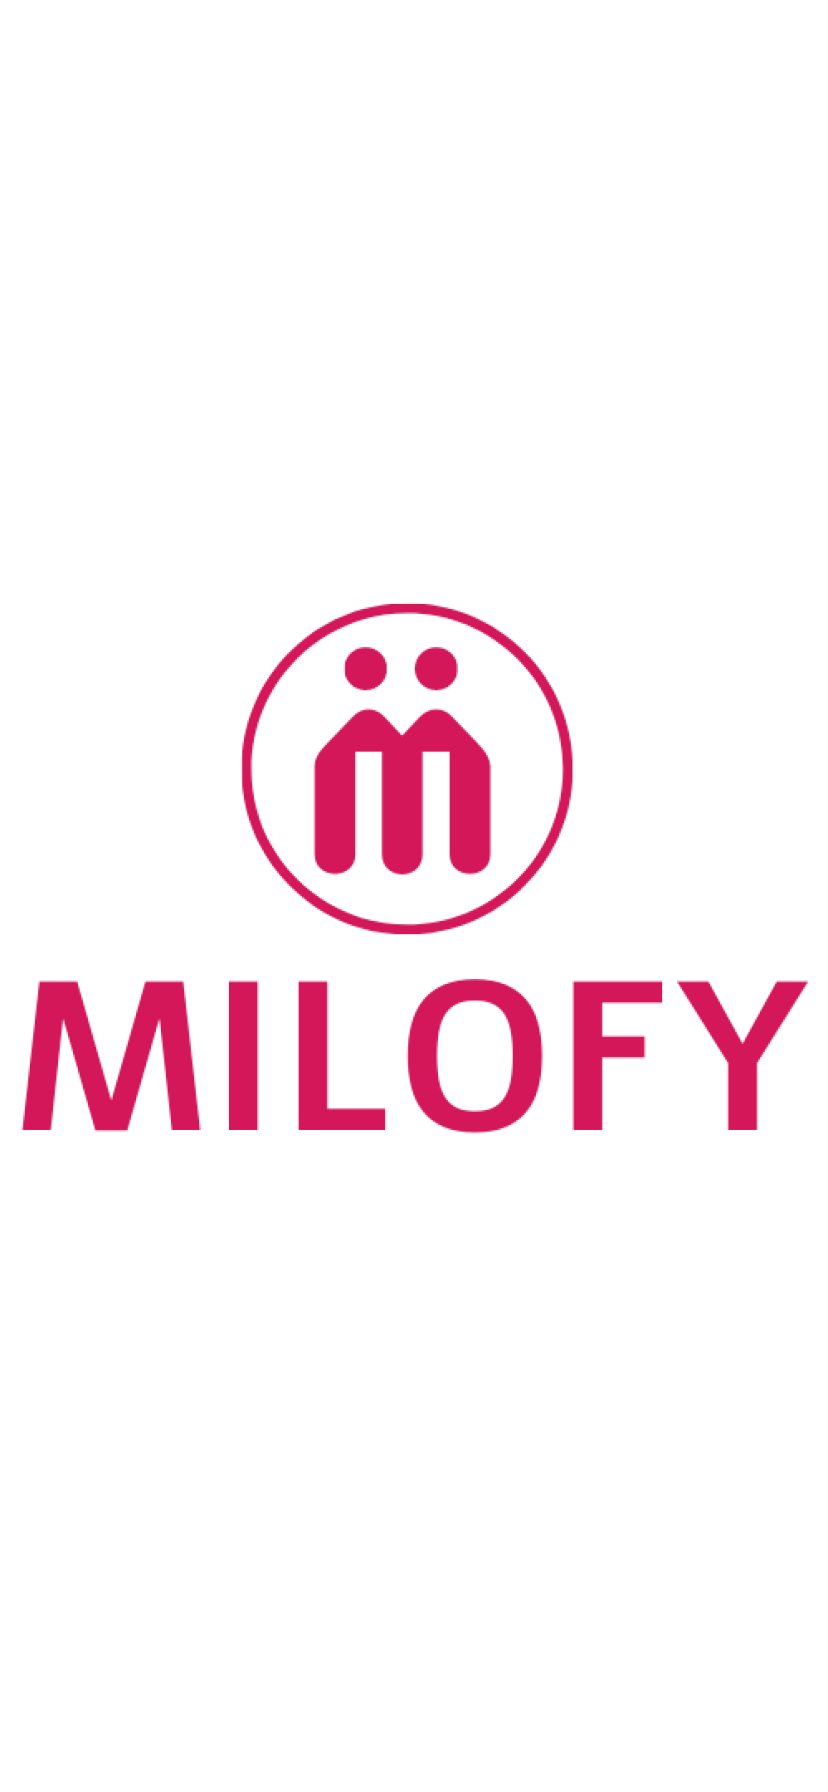 Milofy.com domain name for sale